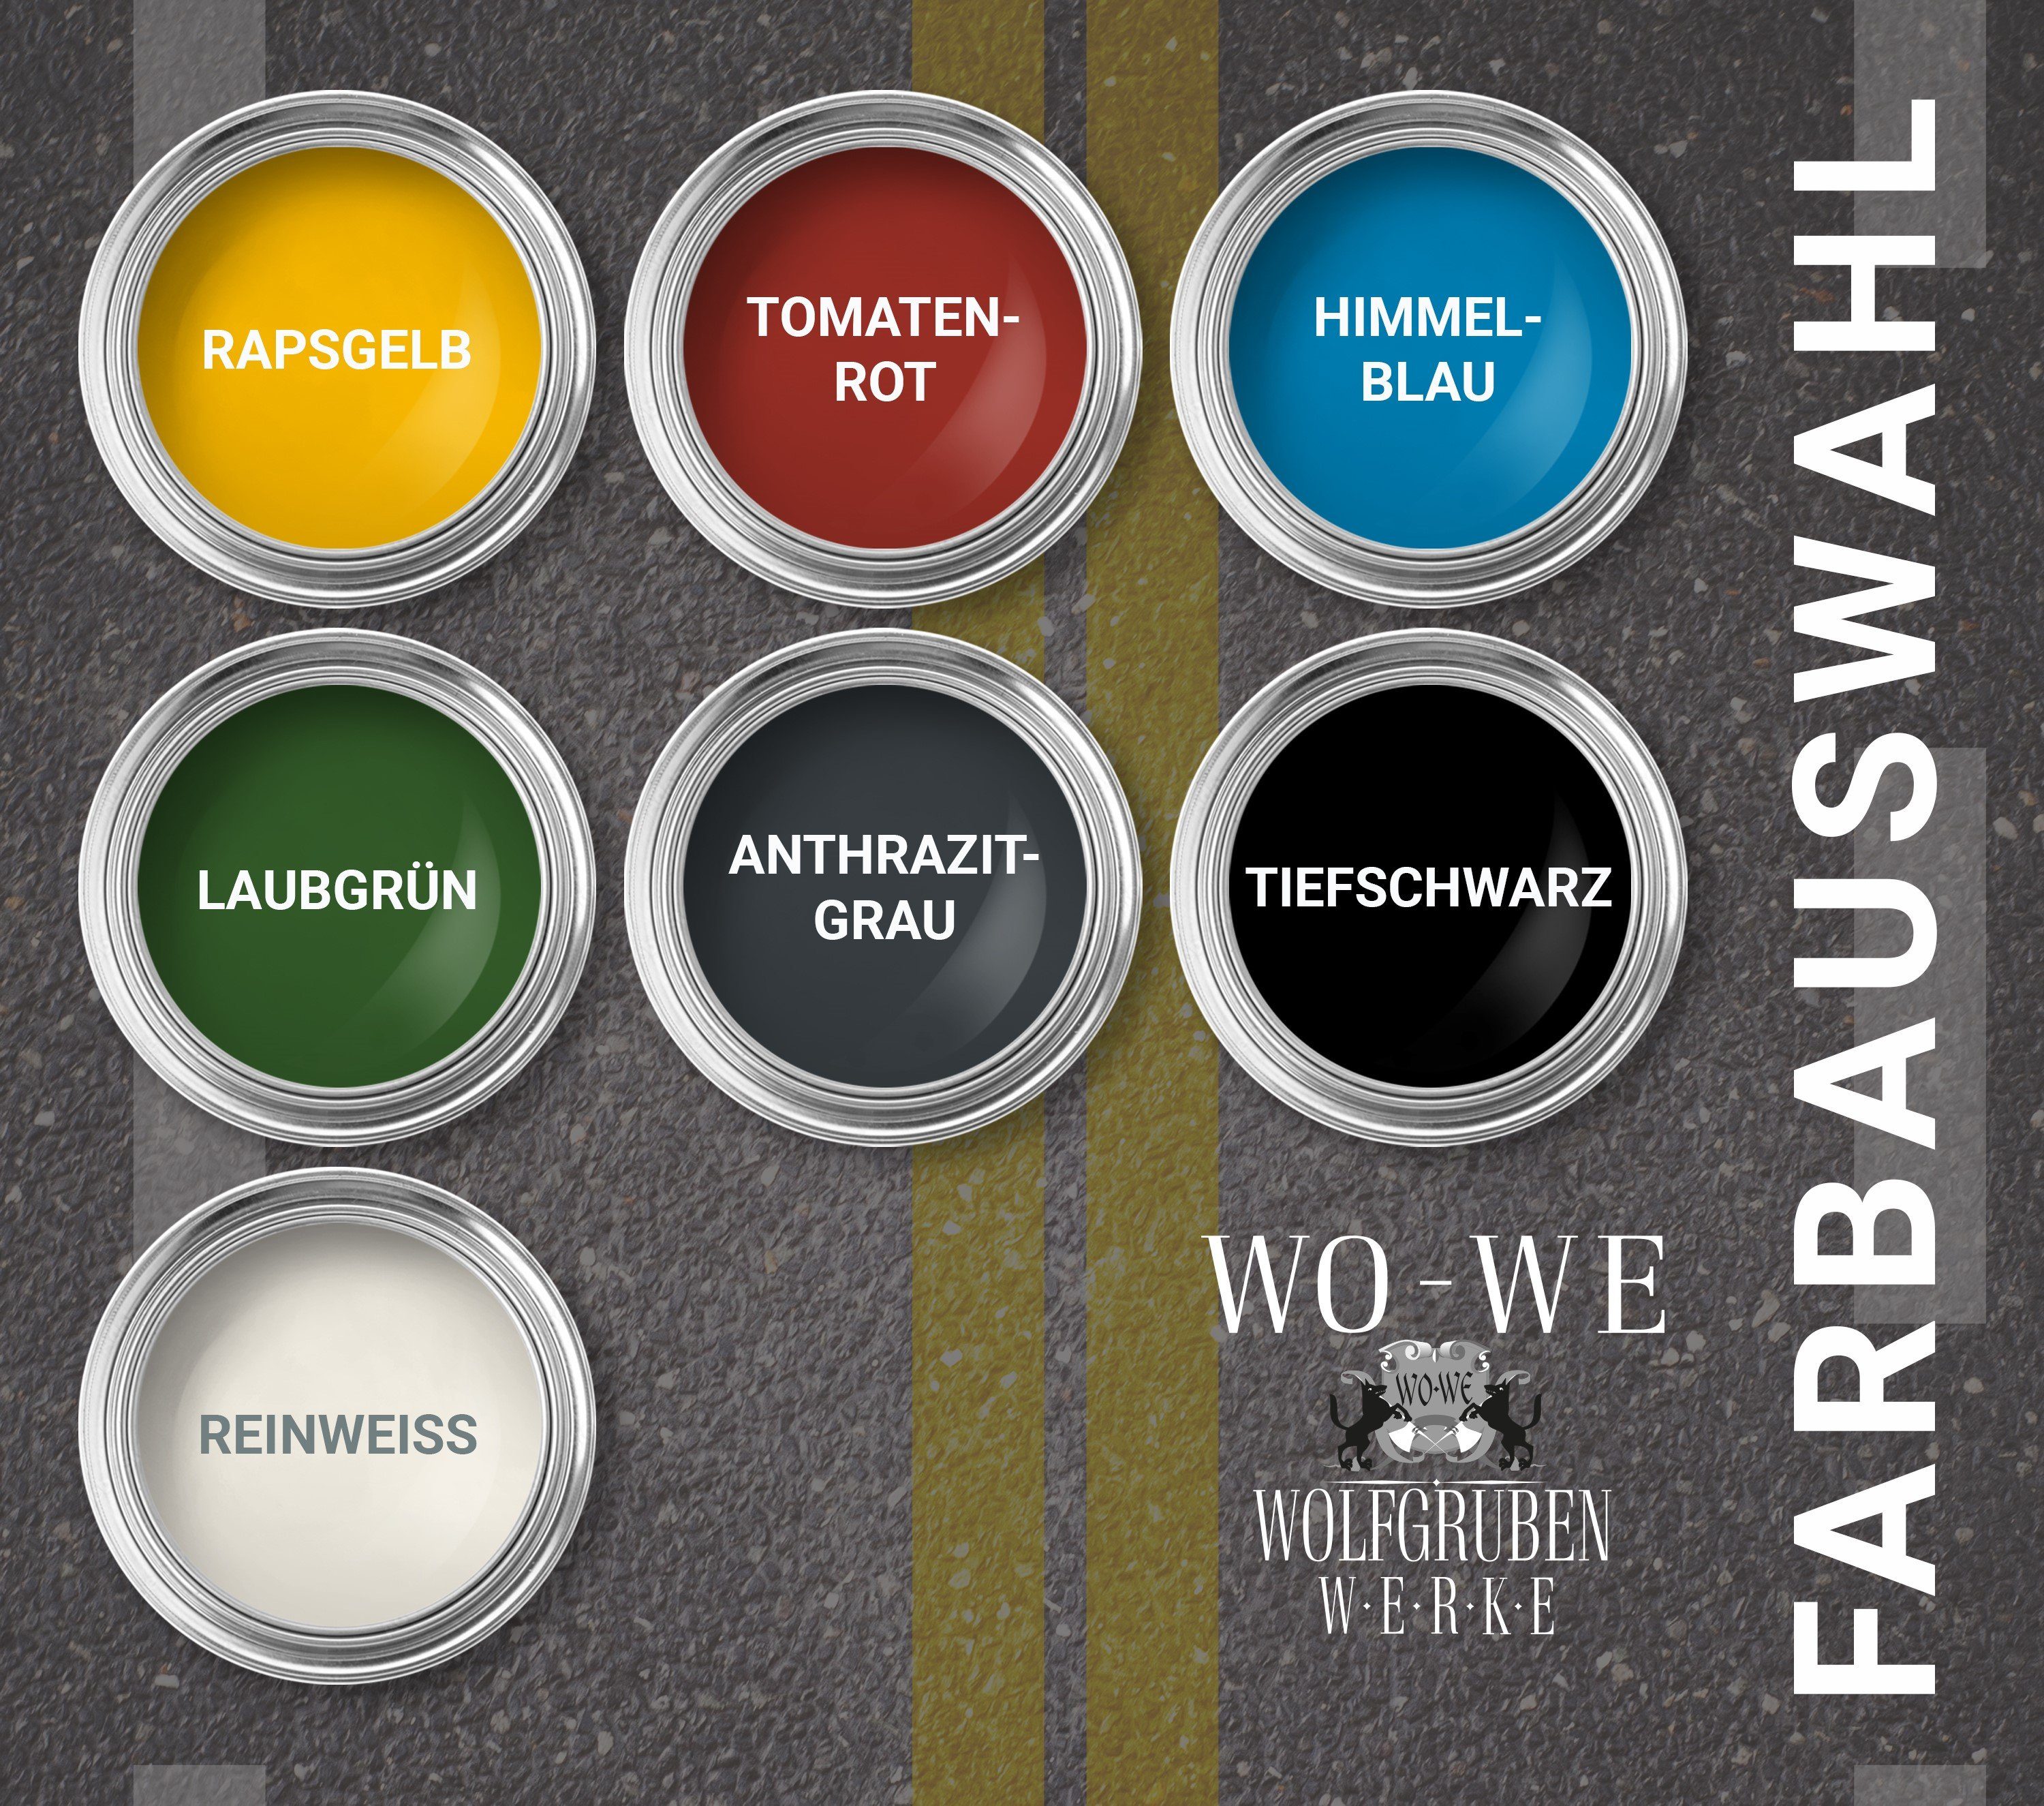 WO-WE Zementfarbe Markierungsfarbe 7016 RAL Strassenmarkierungsfarbe Anthrazitgrau 1-20L, Seidenglänzend SL820, Fahrbahnmarkierung